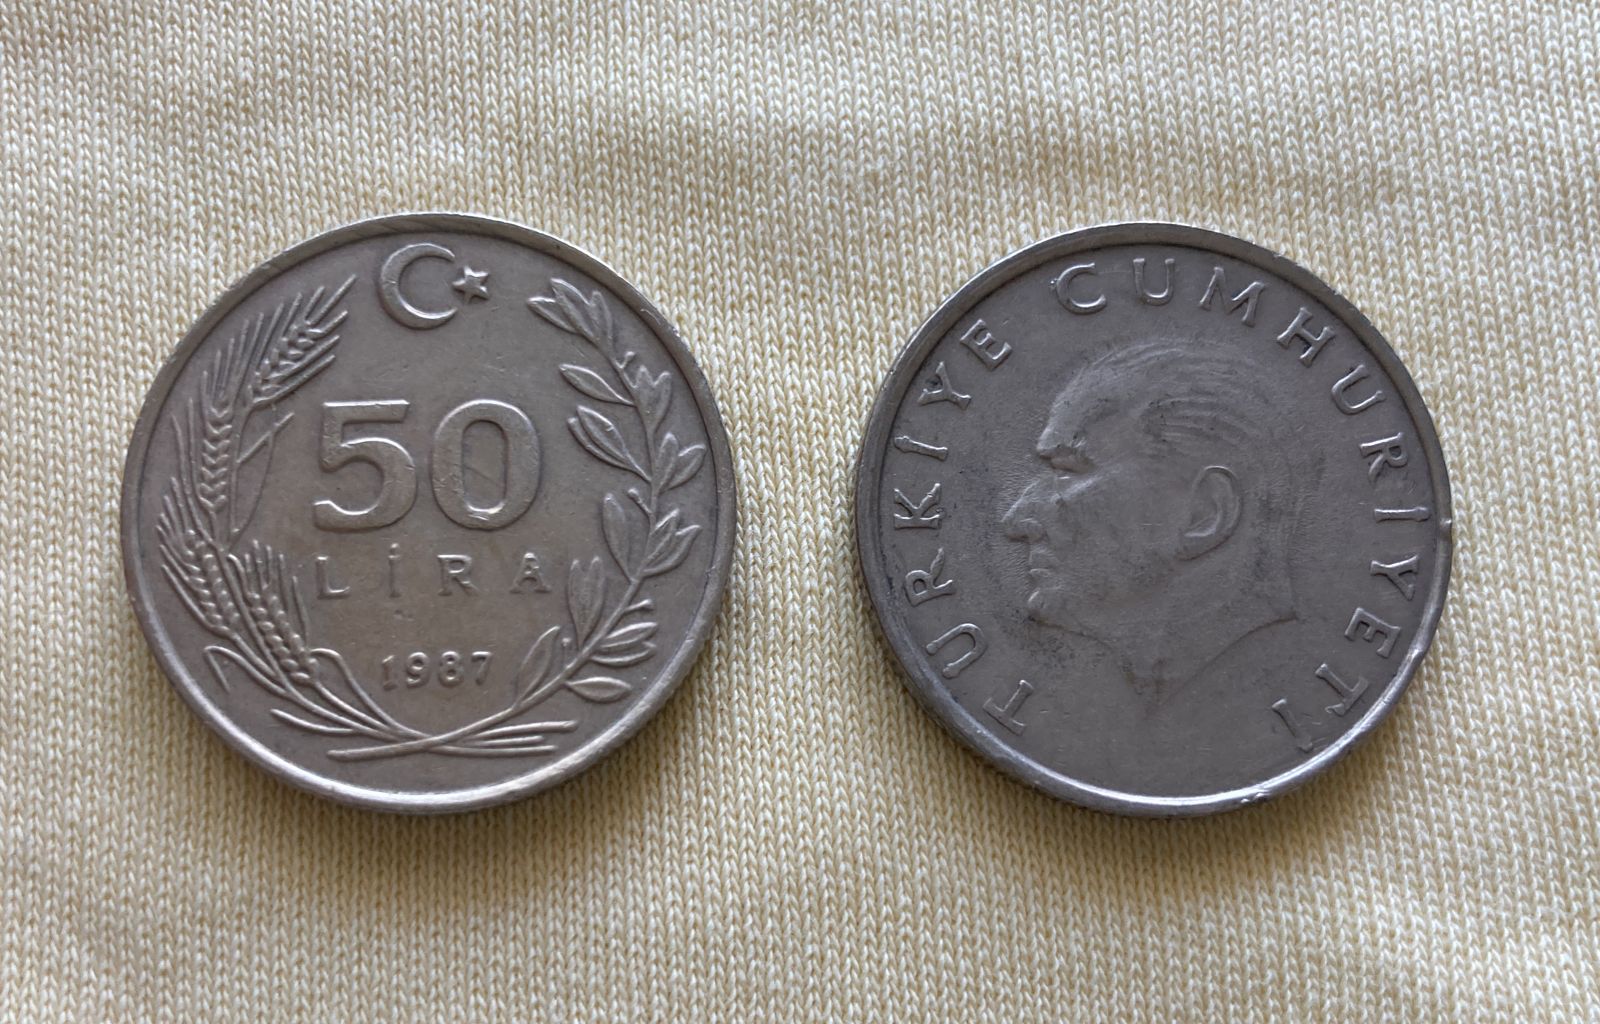 1987 Madeni Para 50 Lira